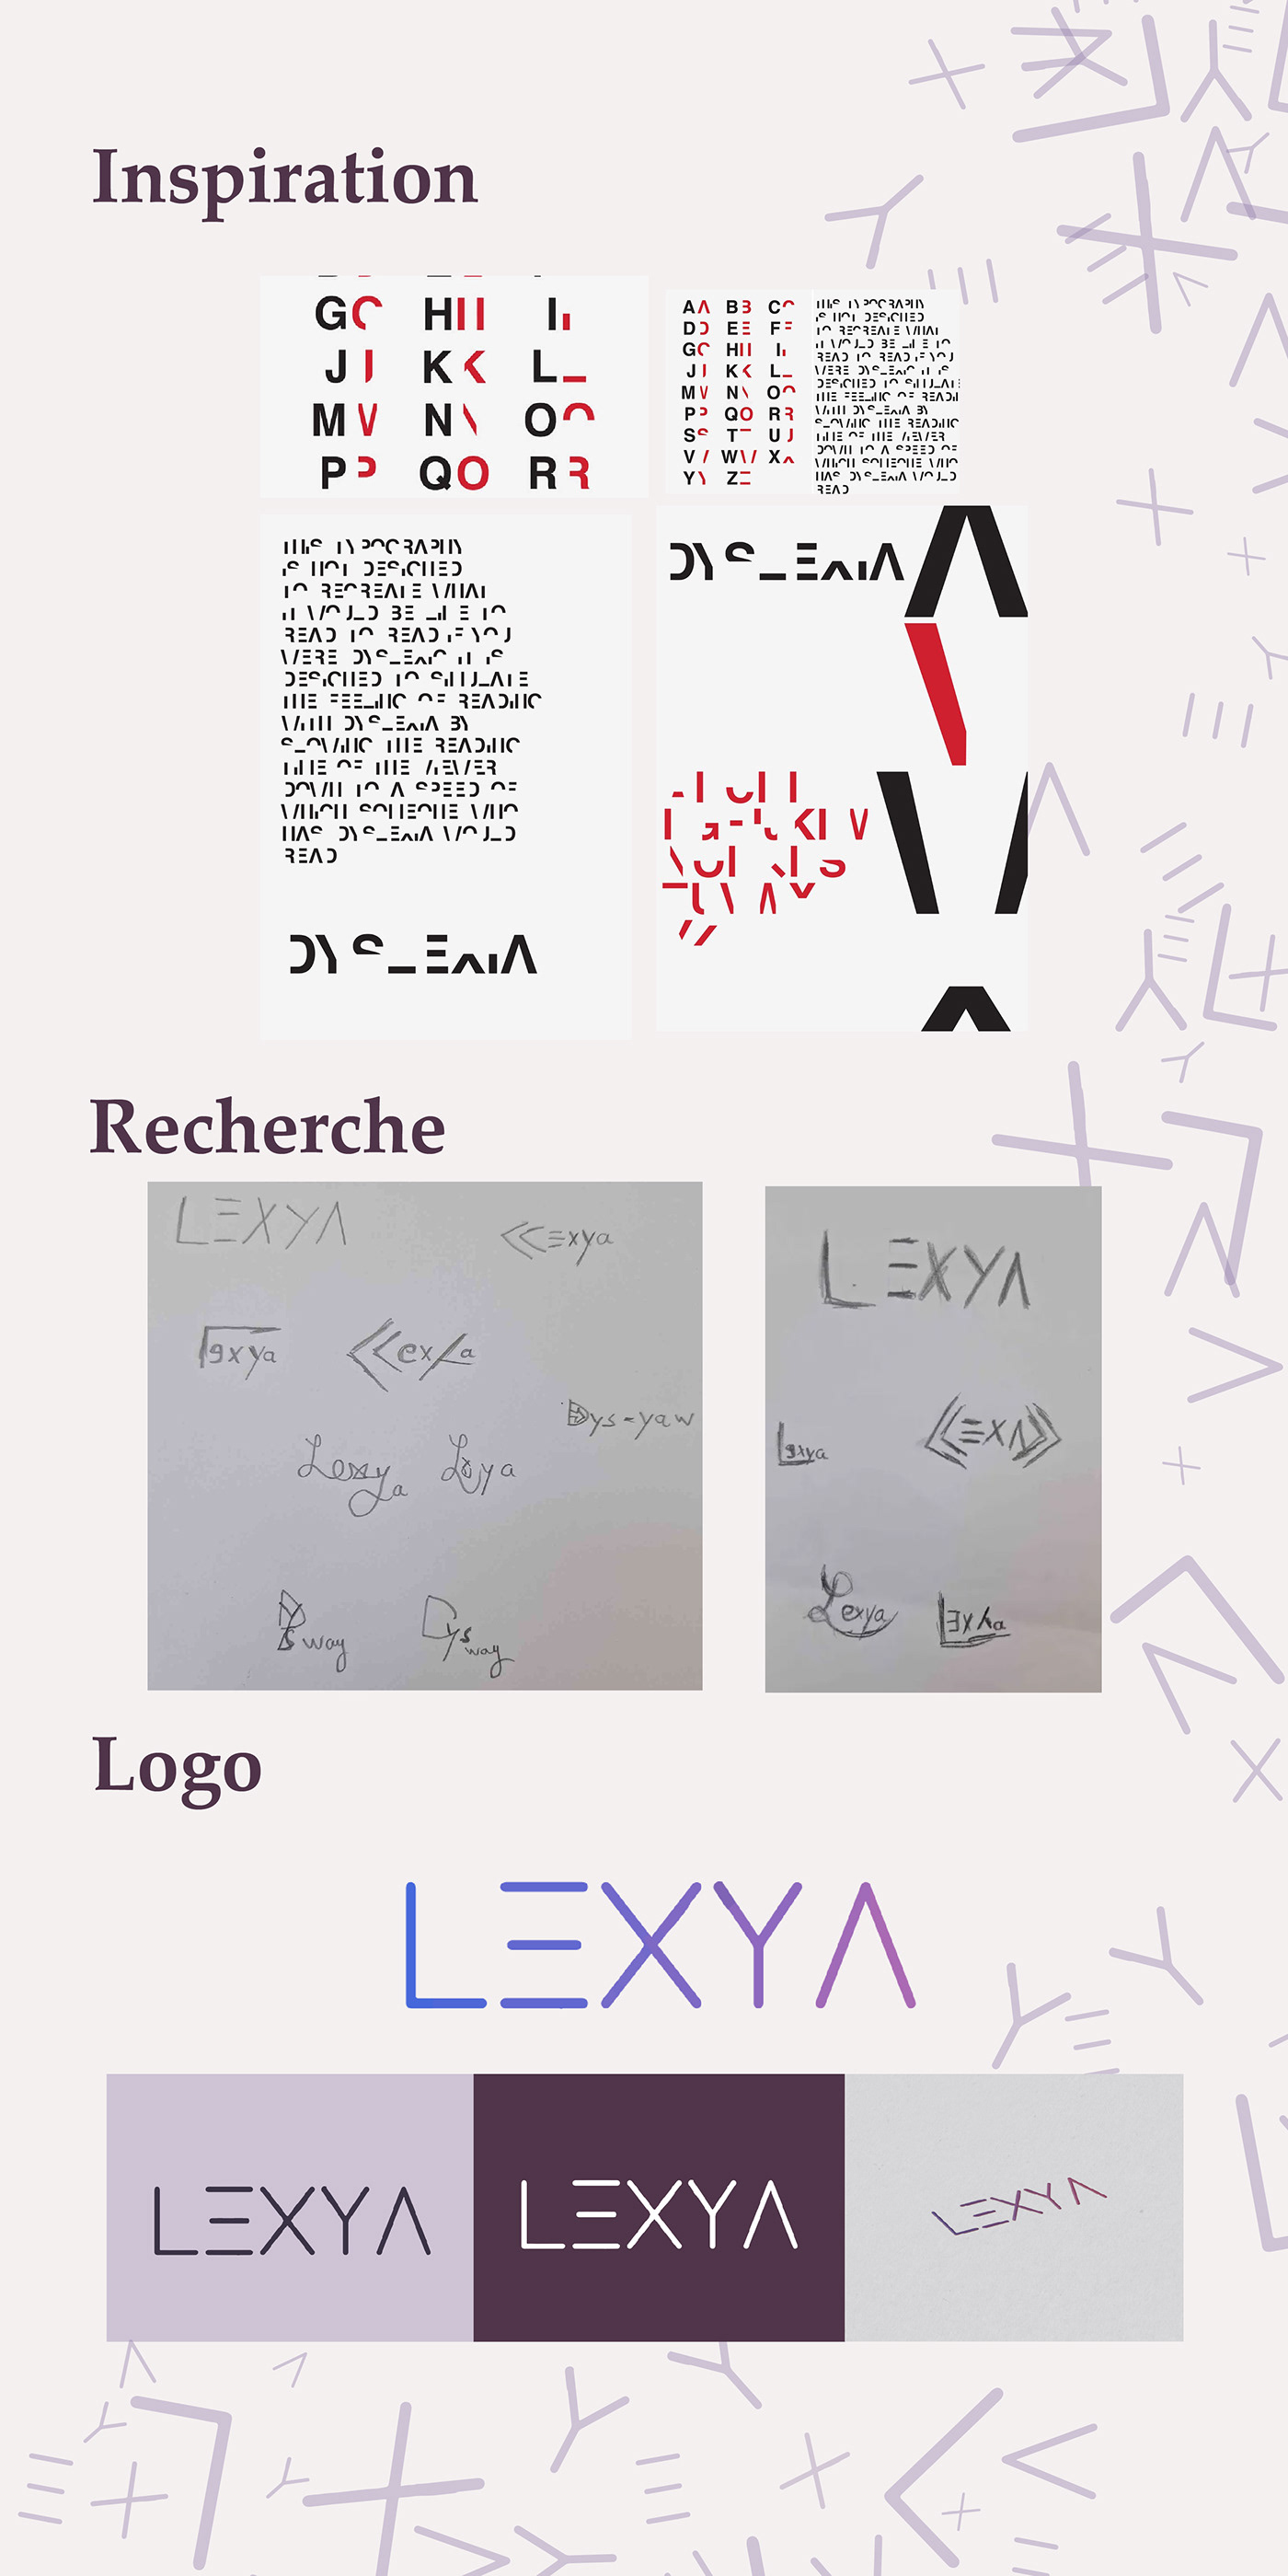 dyslexia Guide kids children's book ILLUSTRATION  Education learning brand identity visual Logo Design